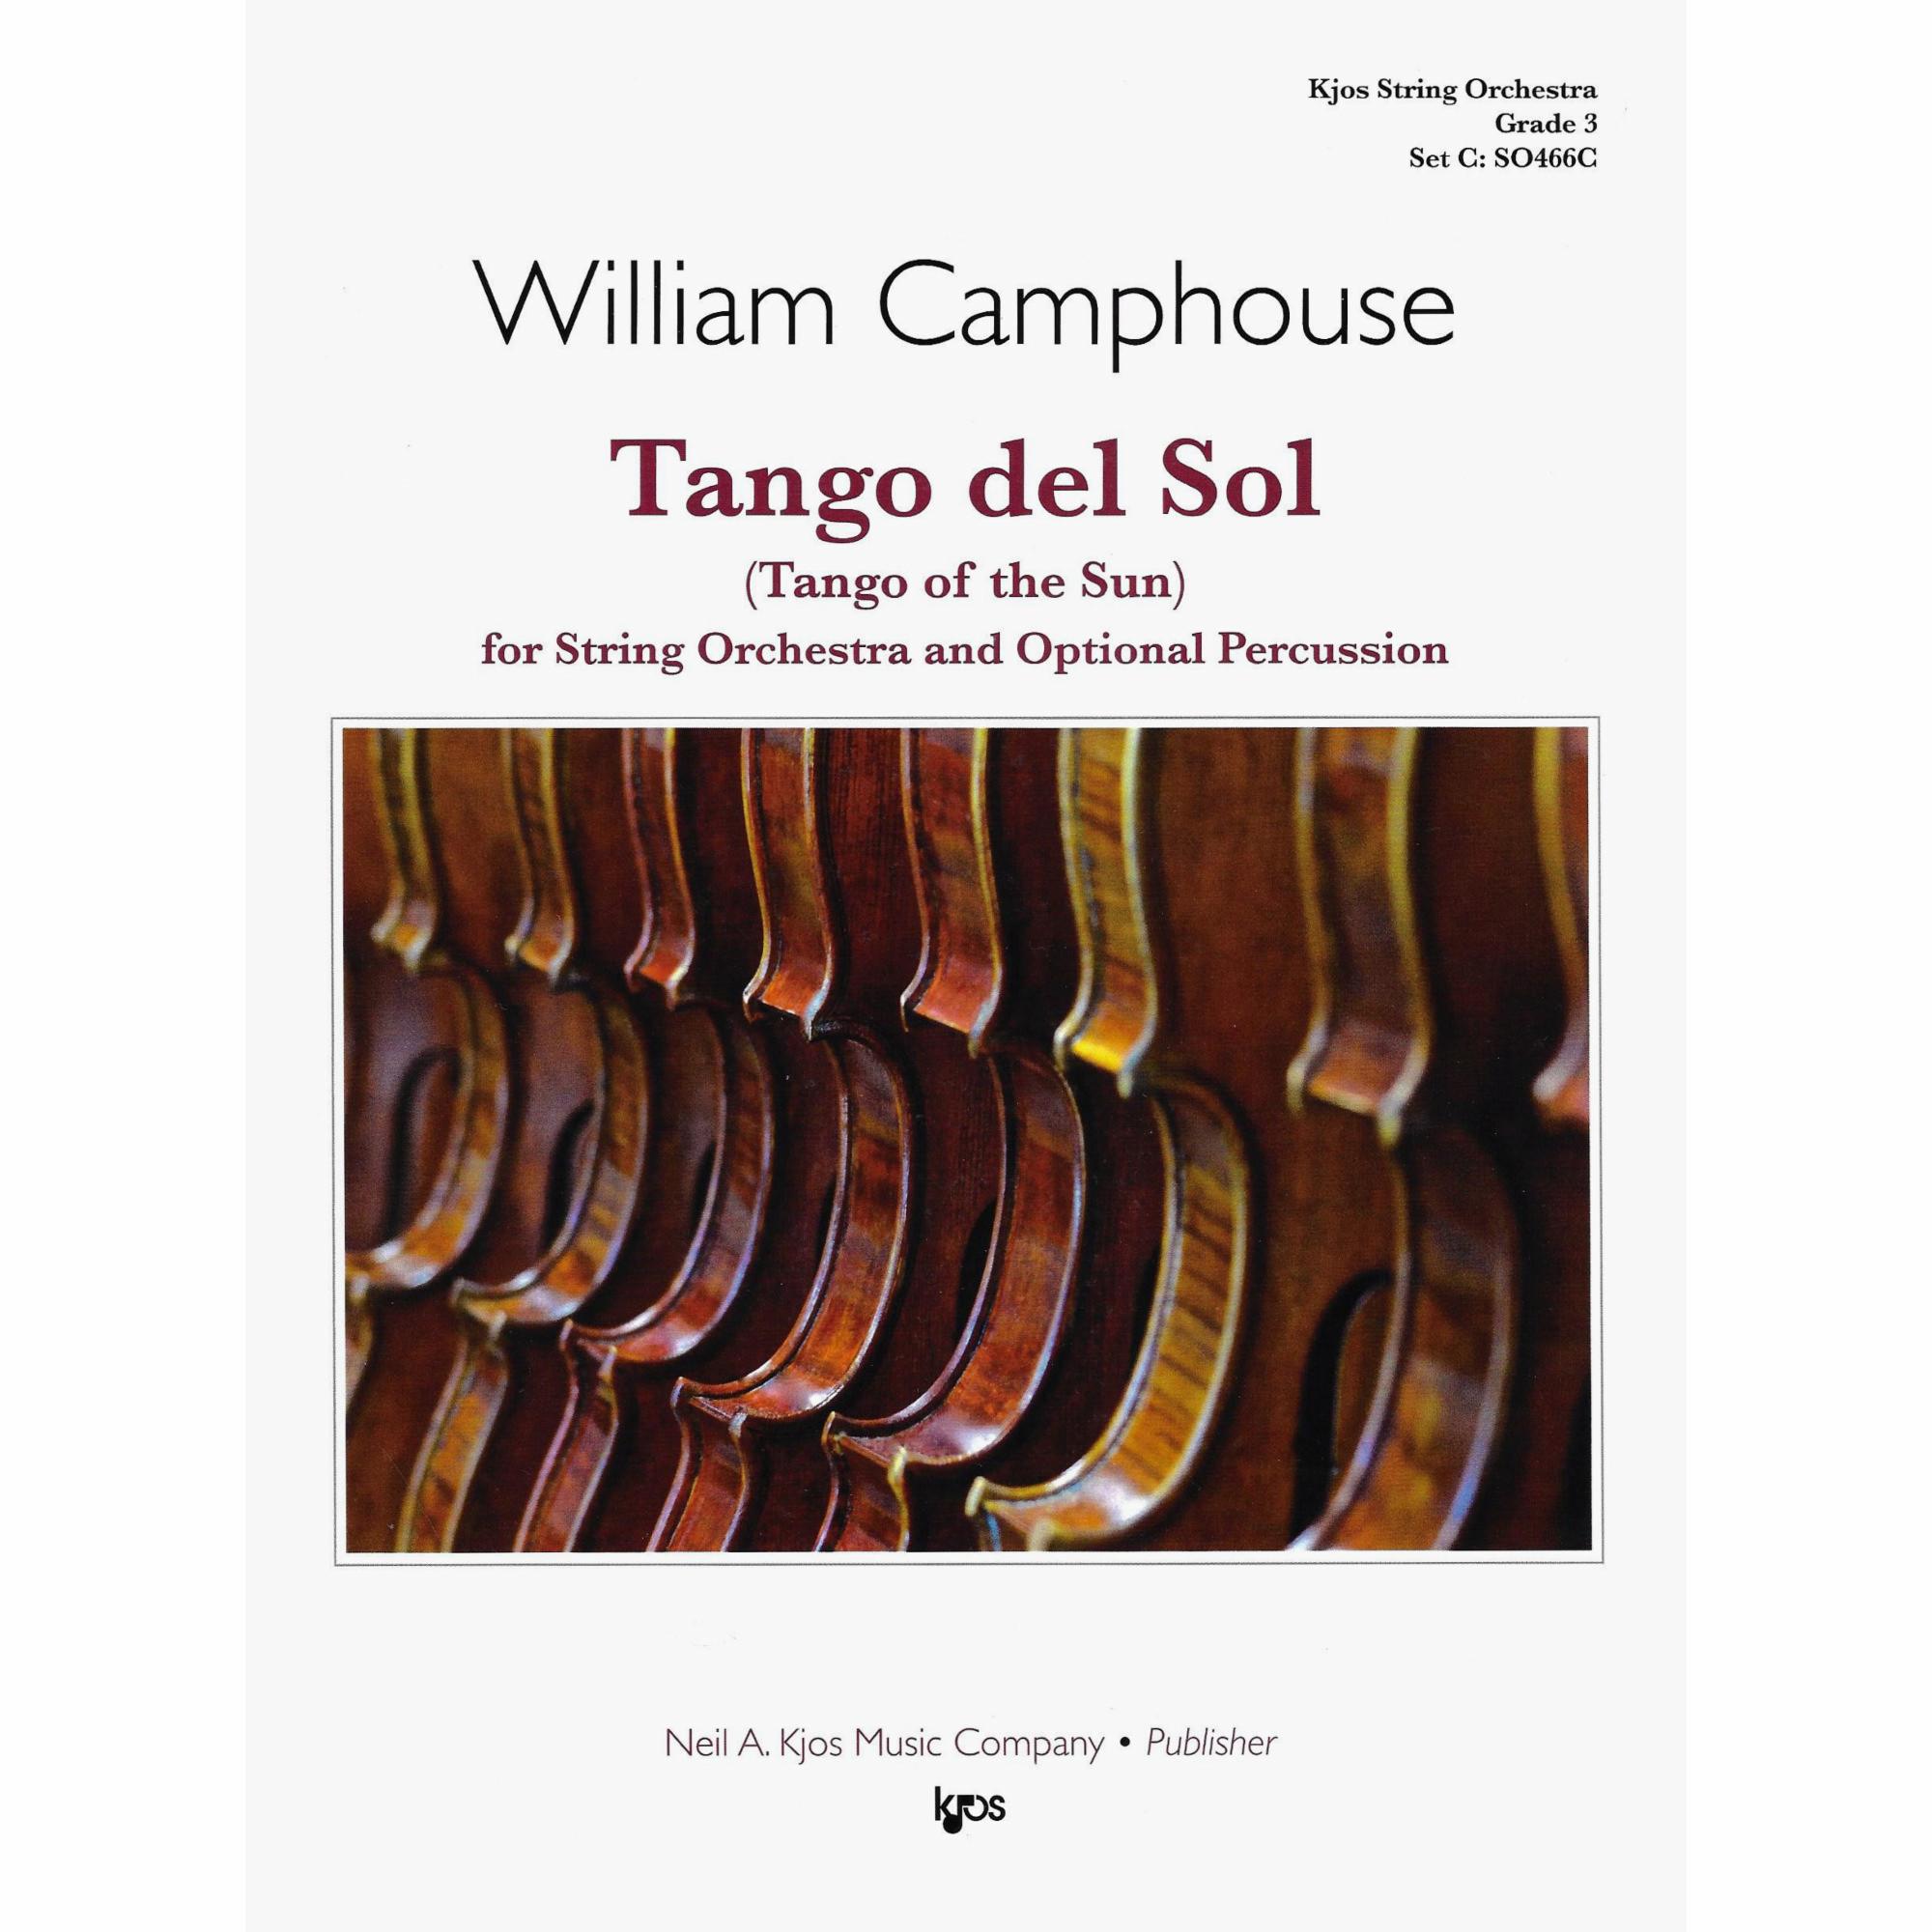 Tango del Sol for String Orchestra